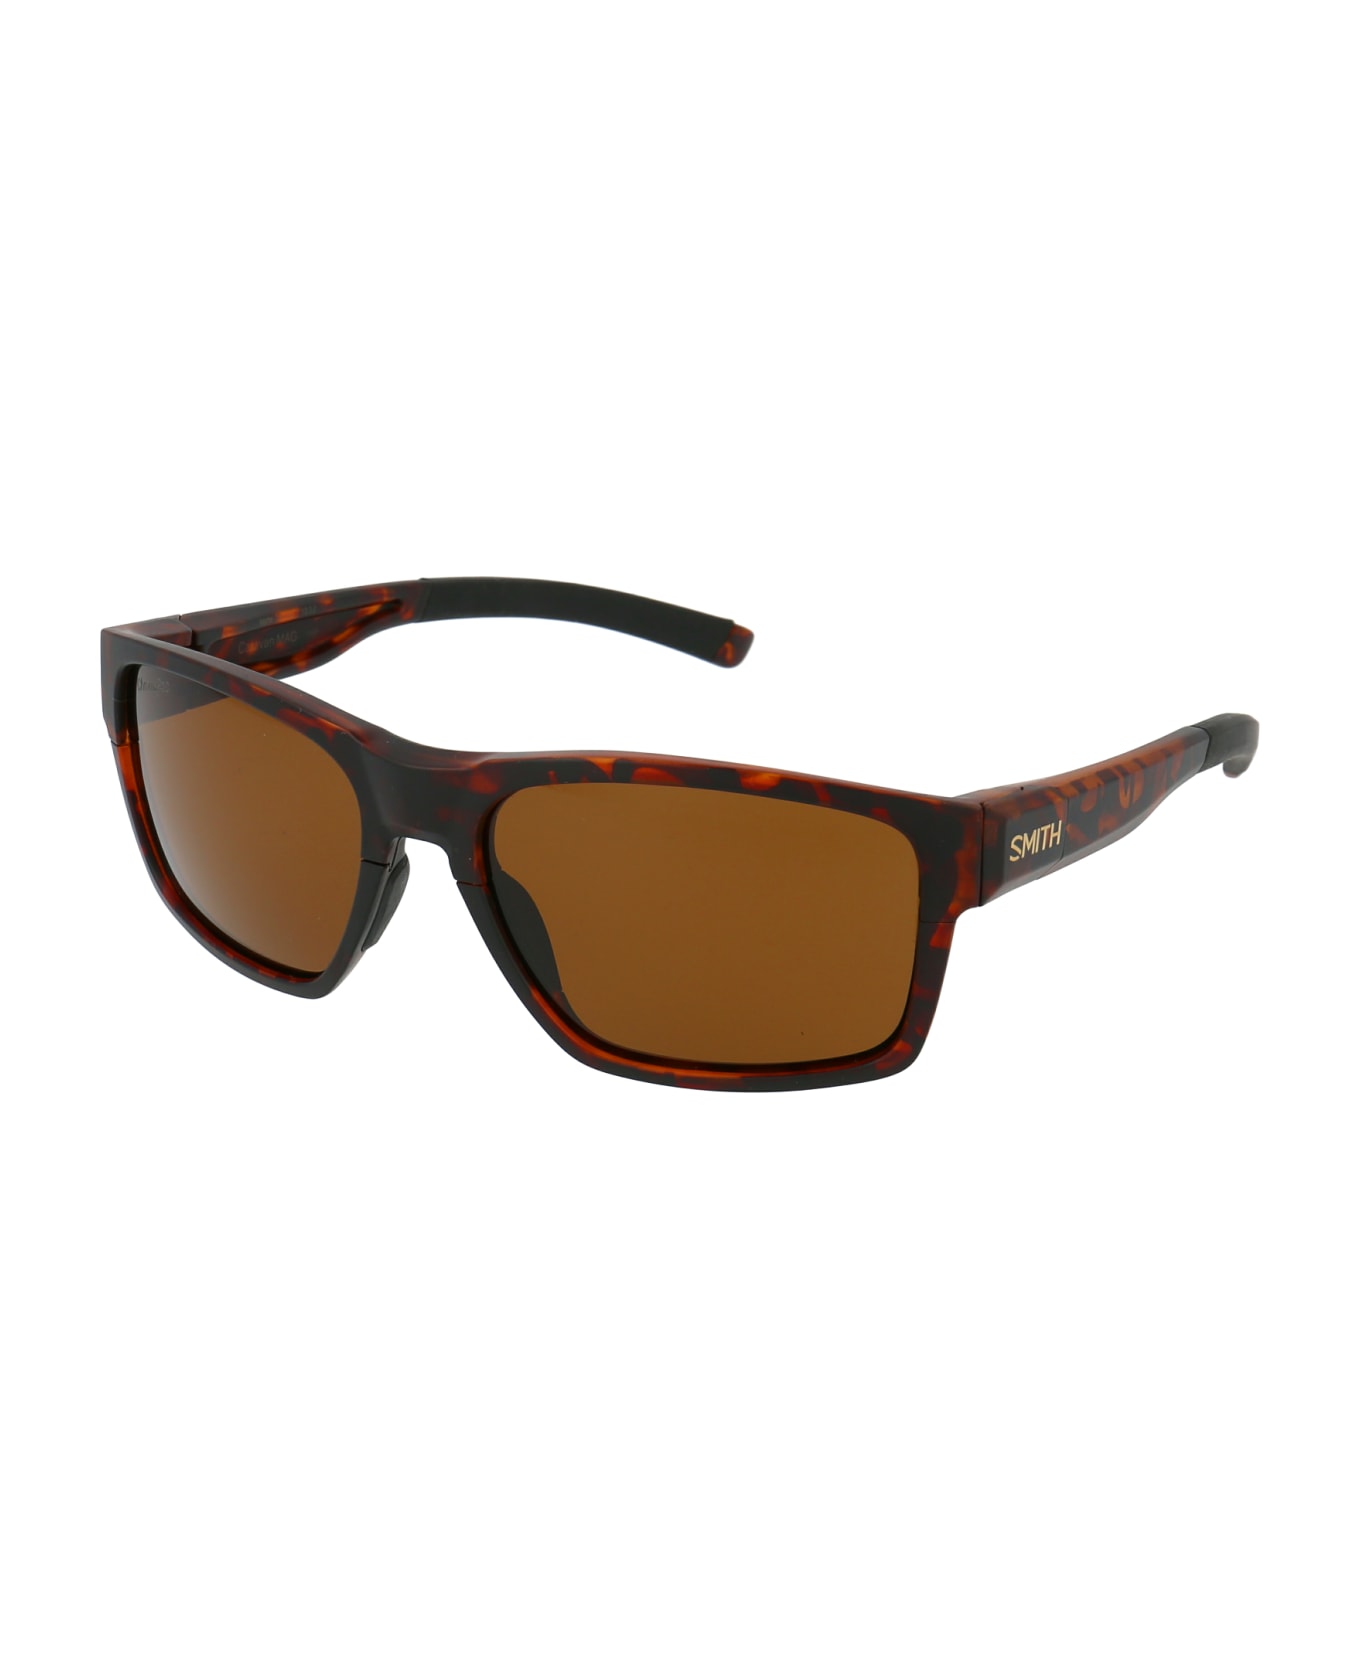 Smith Caravan Mag Sunglasses - N9PL5 MATT HAVANAA サングラス